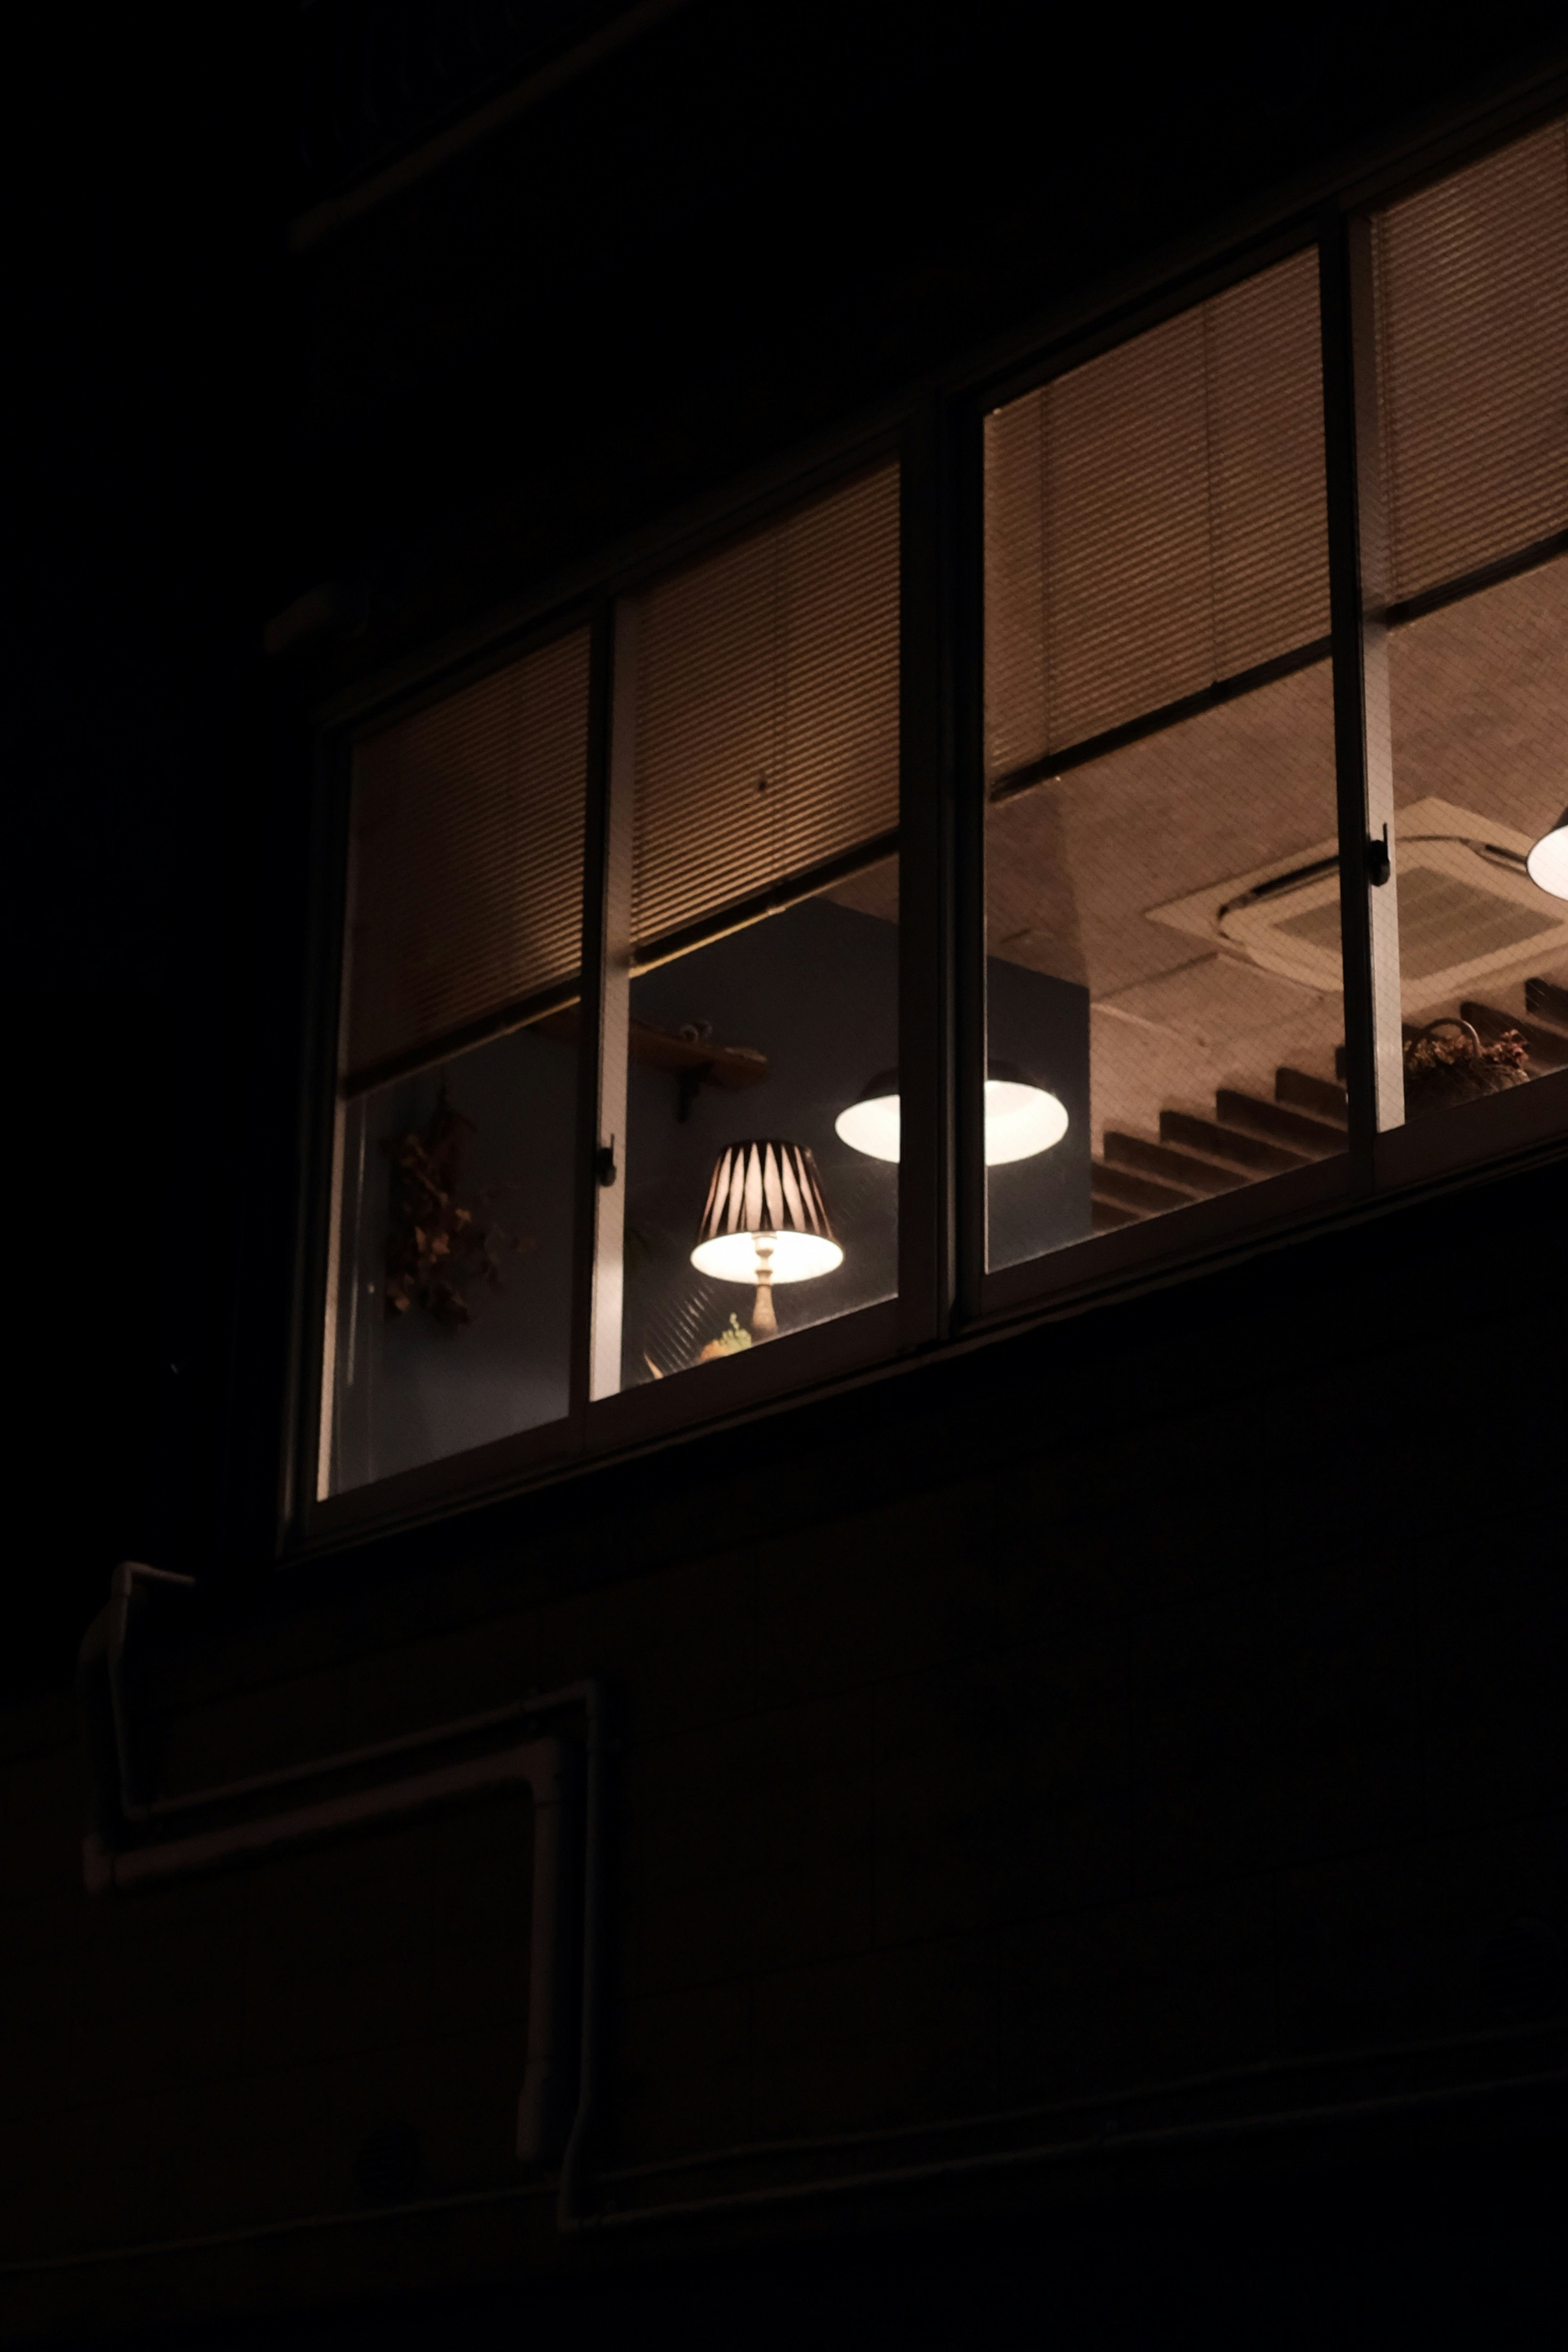 glass window viewing white lamp shade